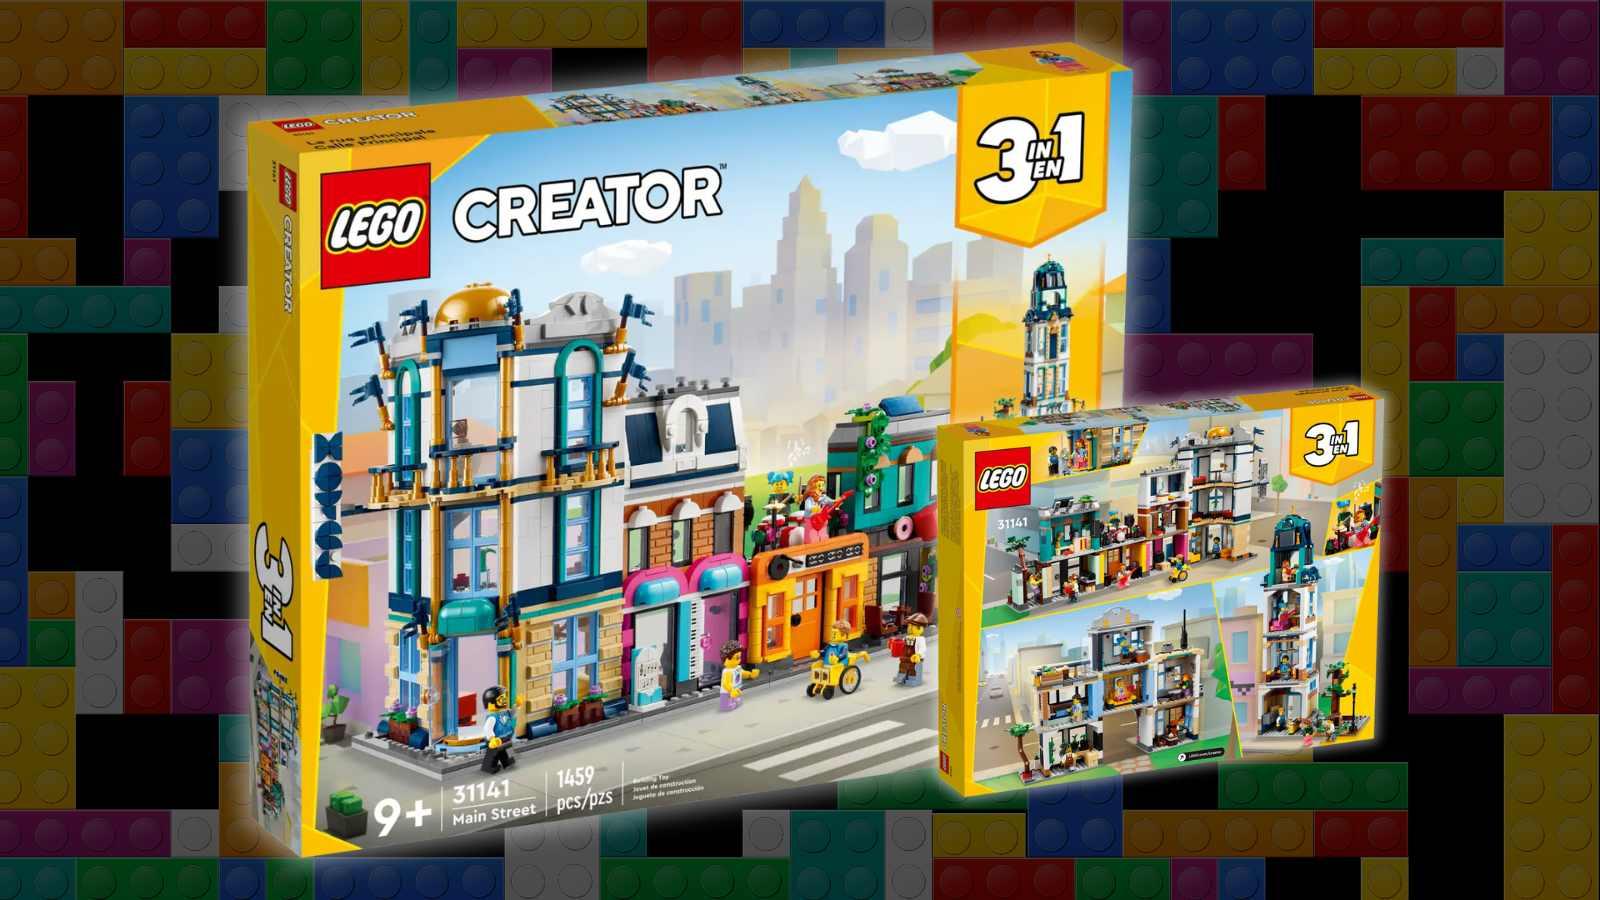 LEGO Creator 3in1 Main Street on LEGO background